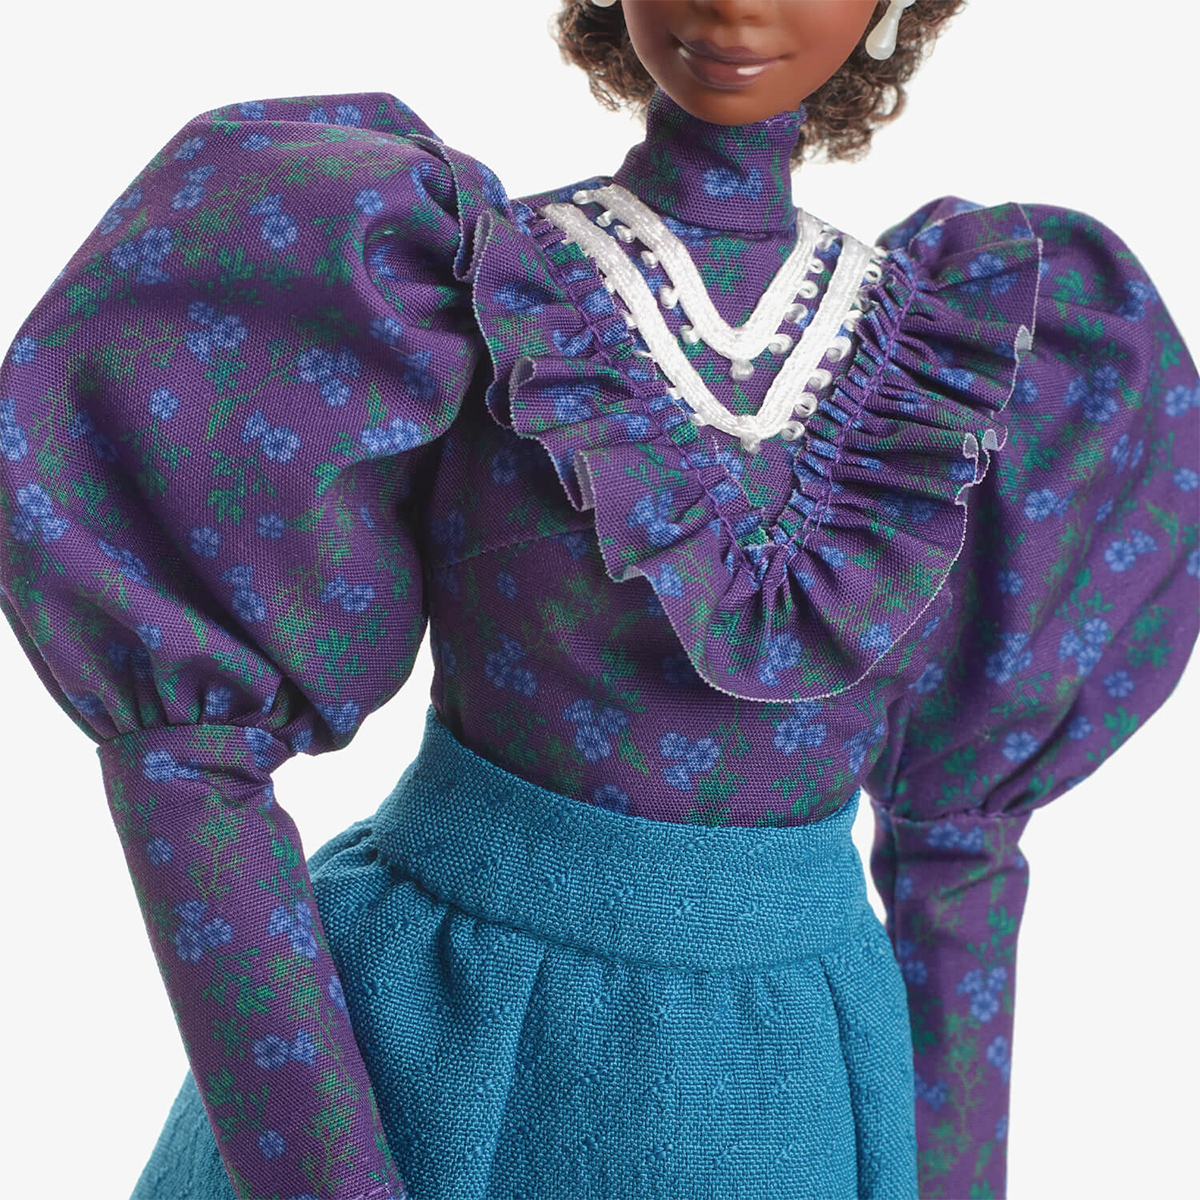 Madam C. J. Walker Barbie Signature Inspiring Women Doll